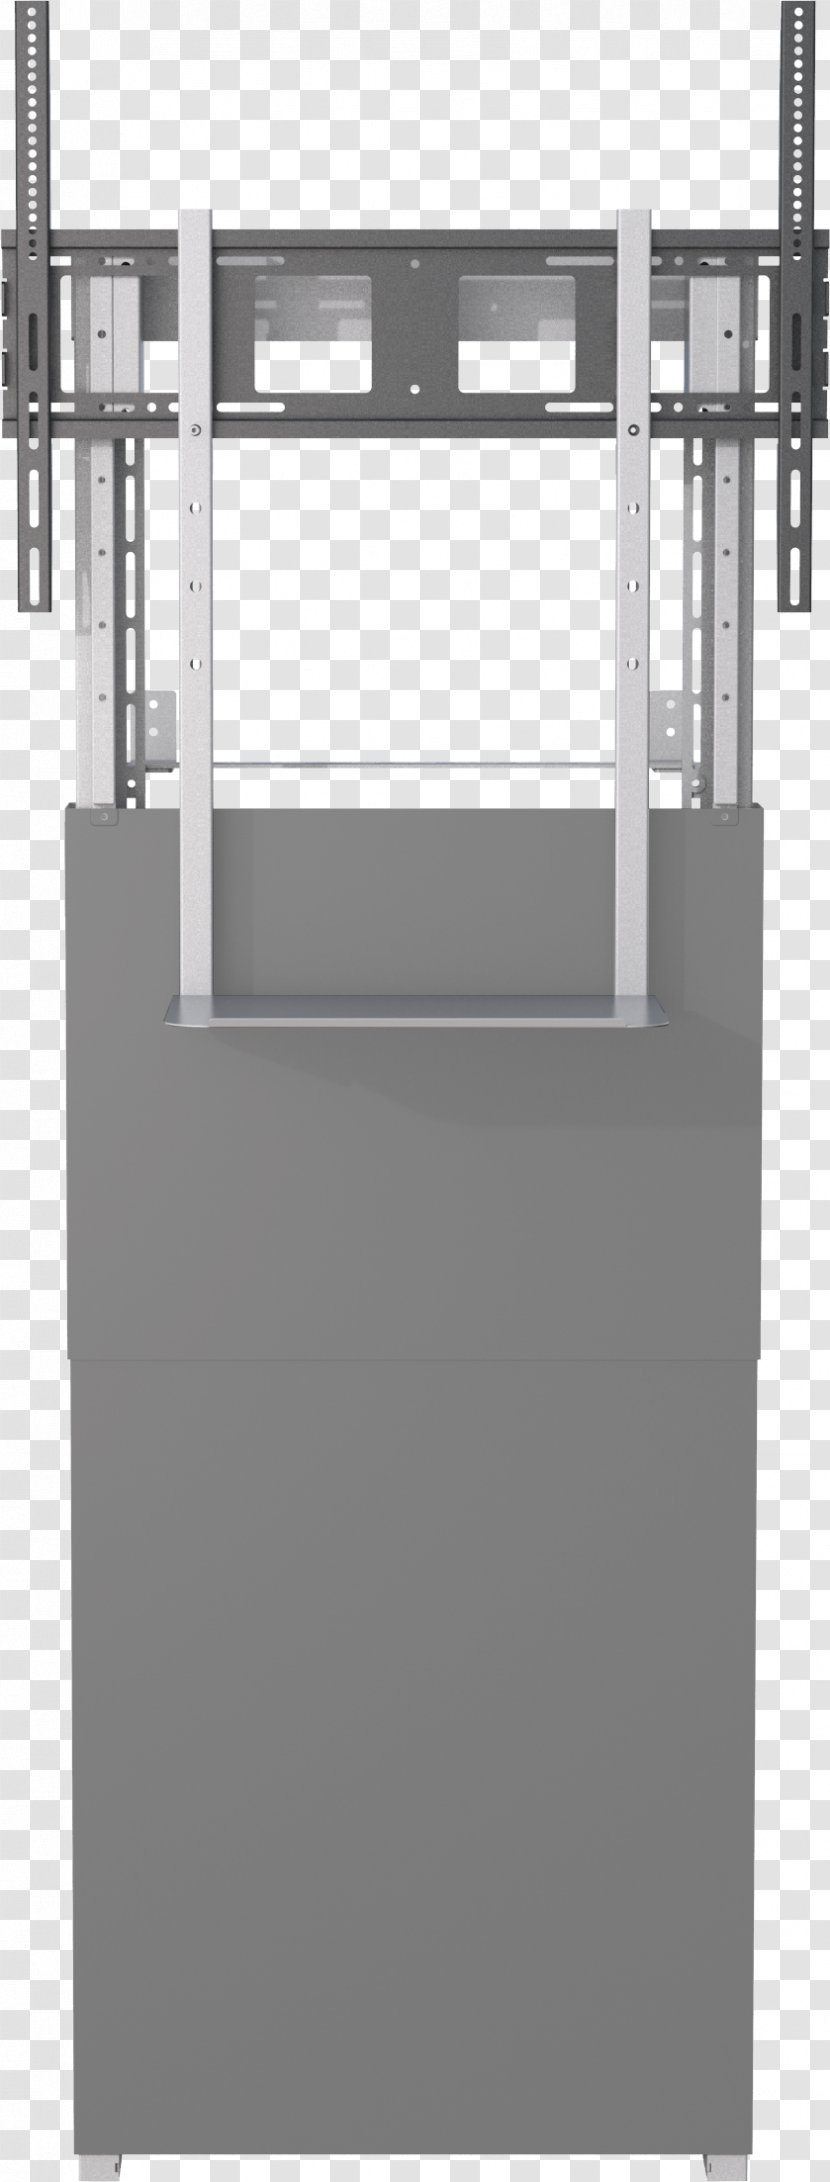 Flat Panel Display Device - Av Products Inc - Copywriter Floor Panels Transparent PNG